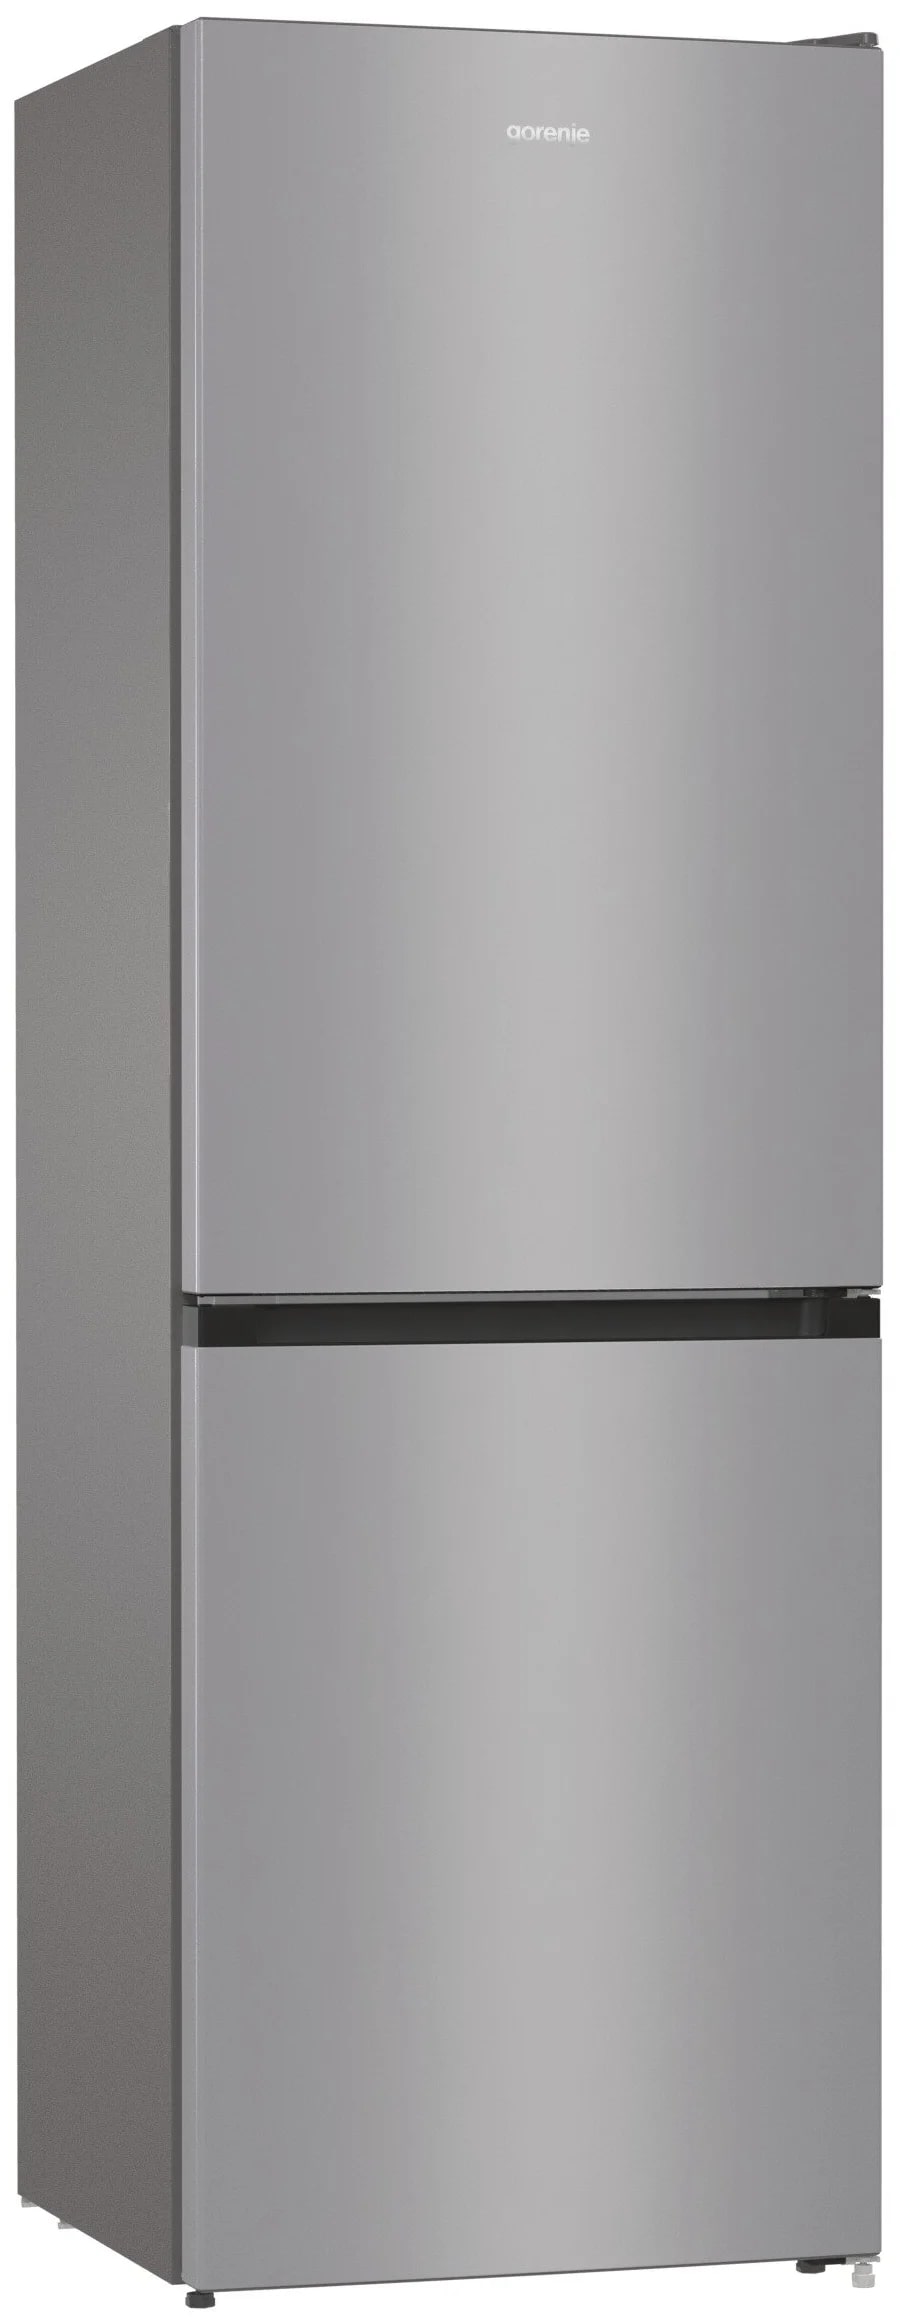 Холодильник Gorenje RK6191ES4, серебристый